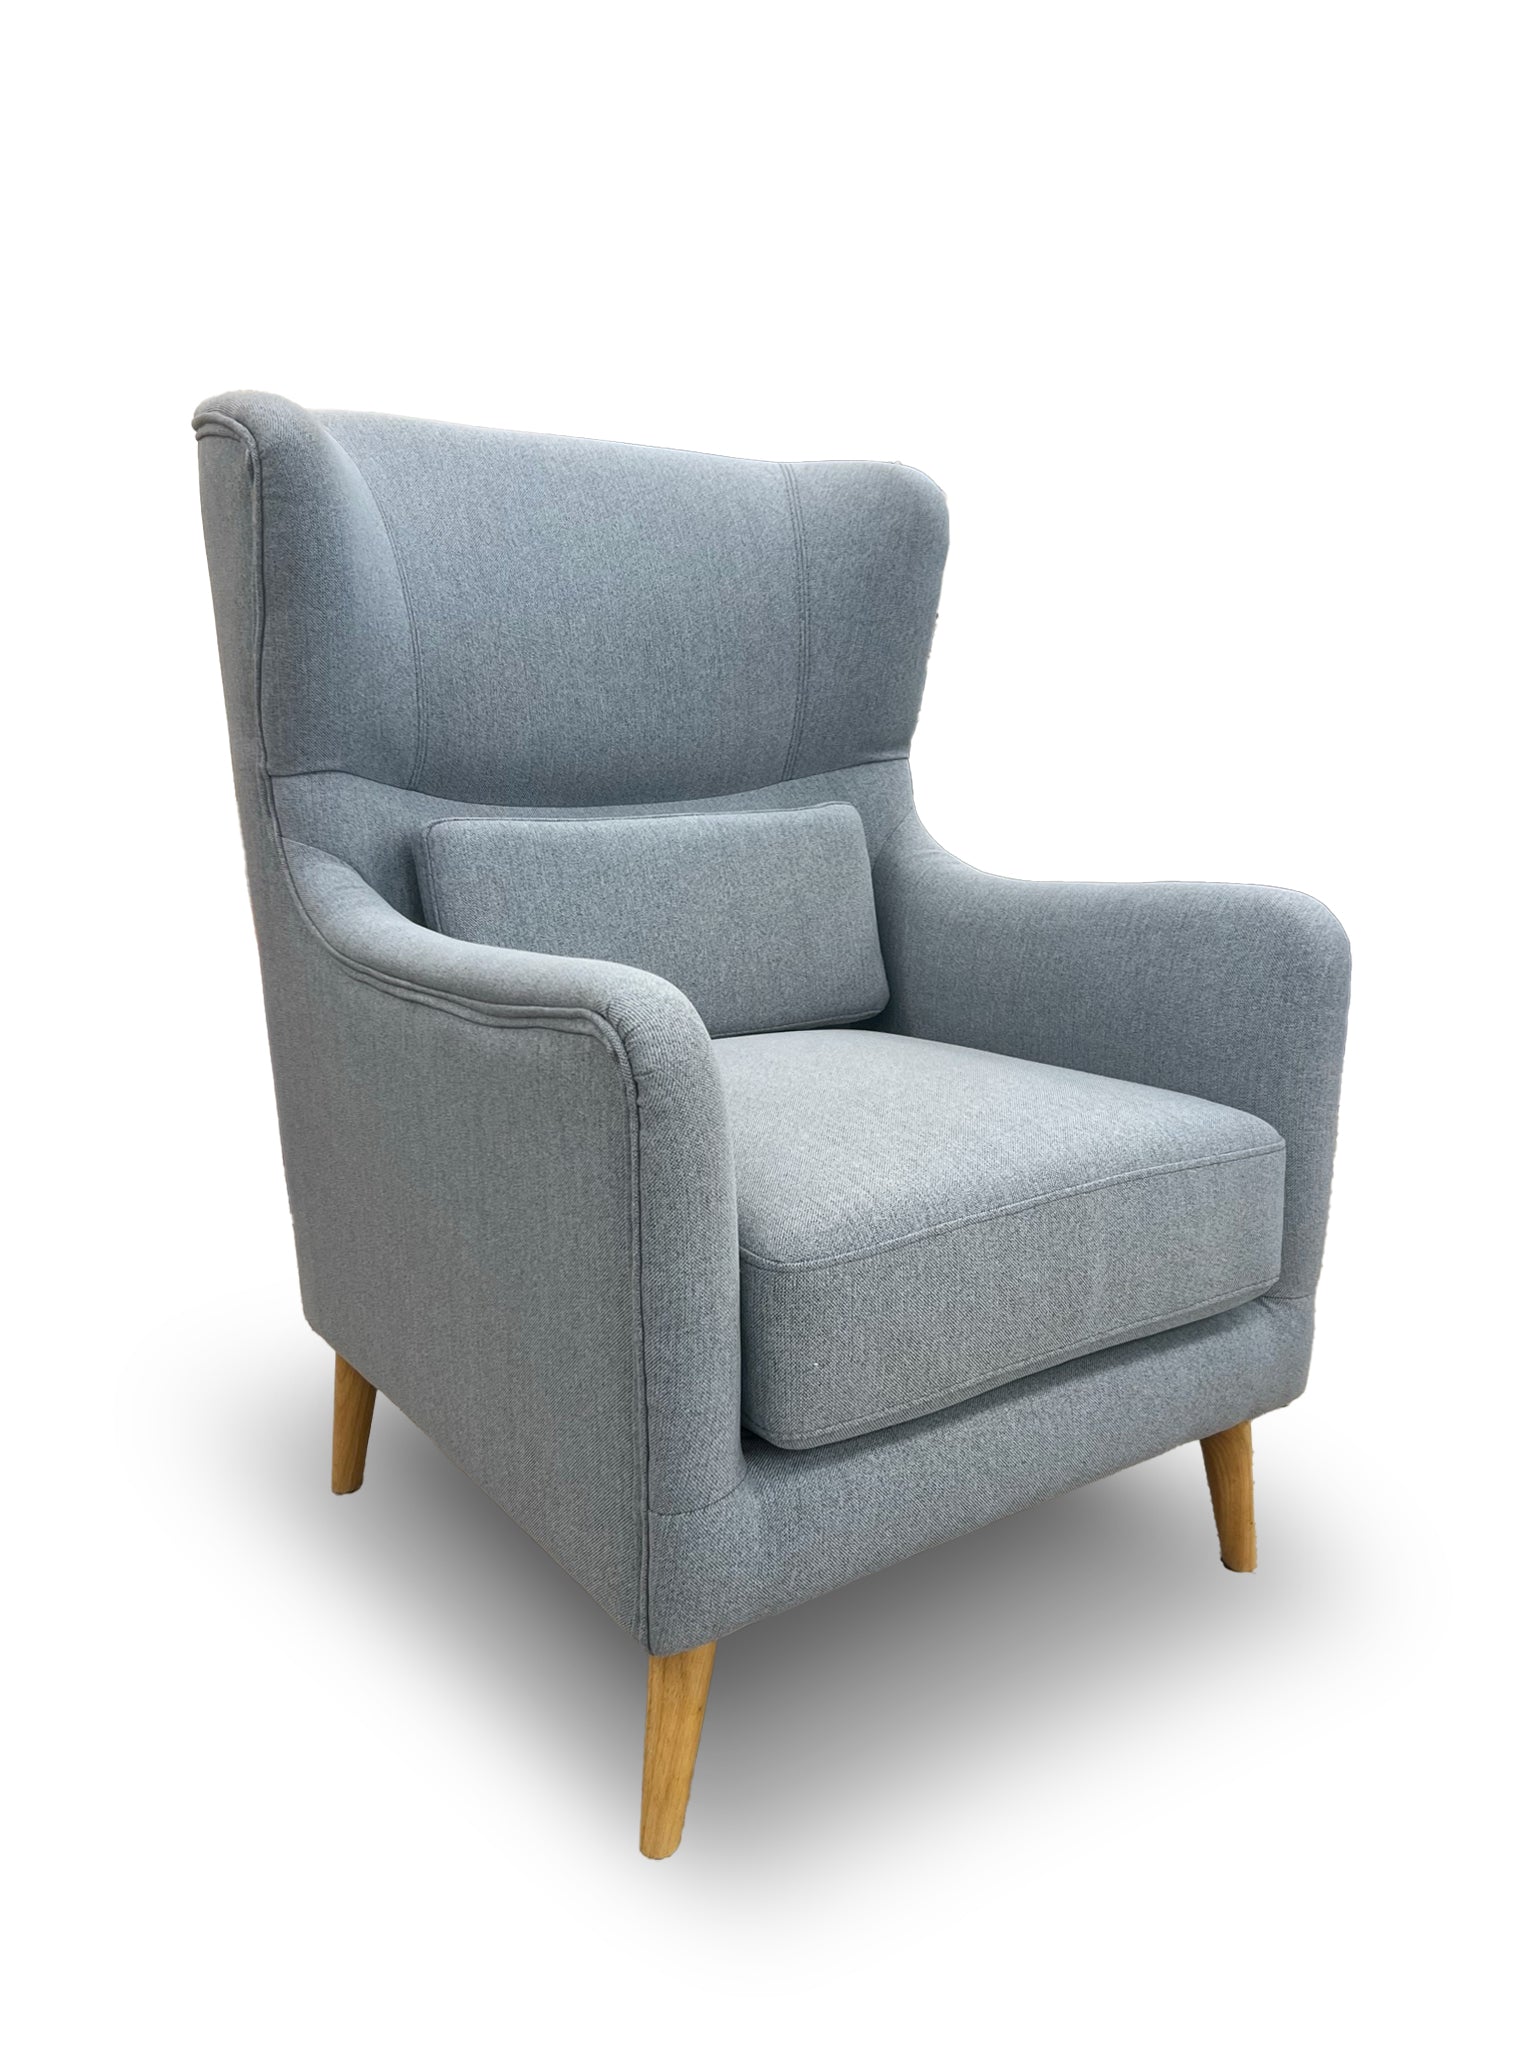 Granada Accent Chair In Powder Blue